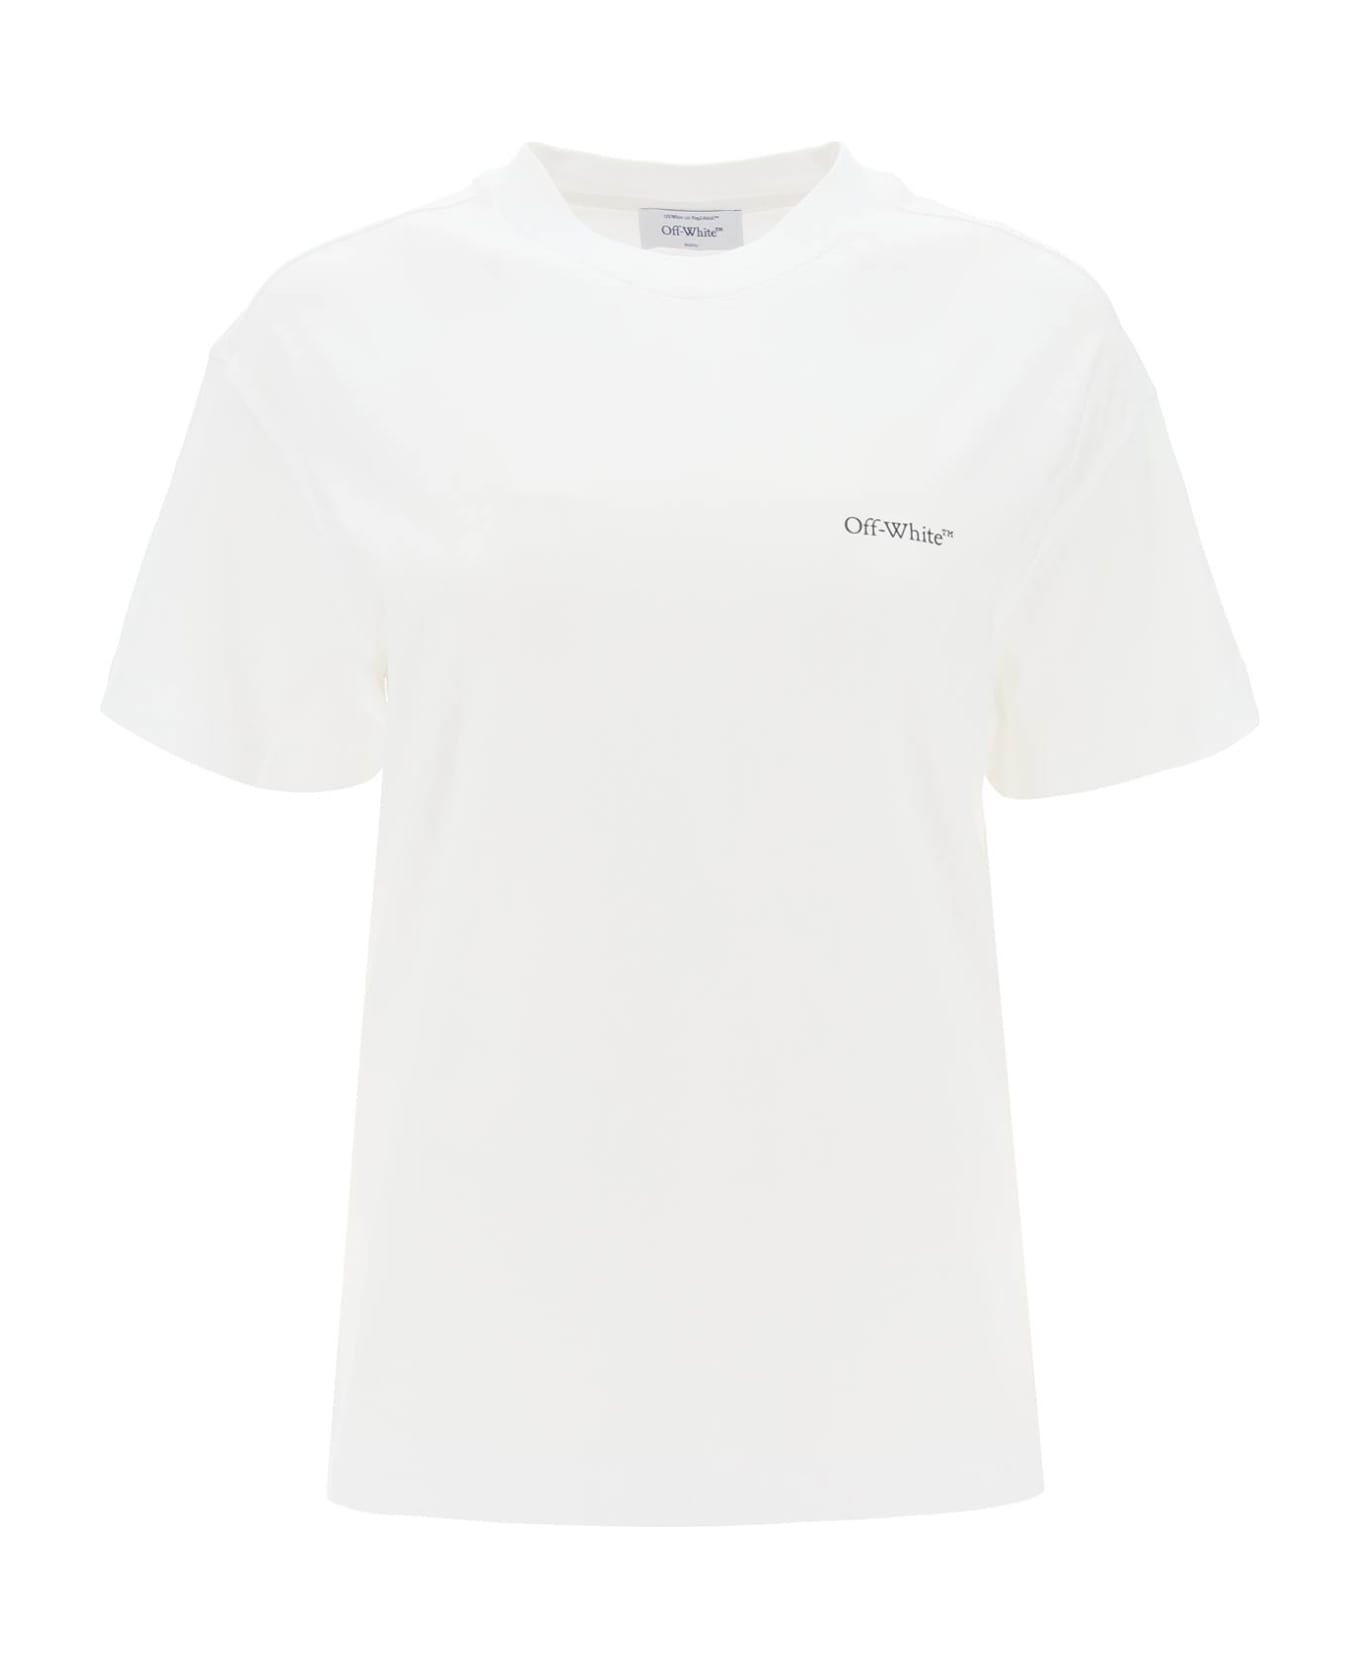 Off-White X-ray Arrow Crewneck T-shirt - White Multicolor